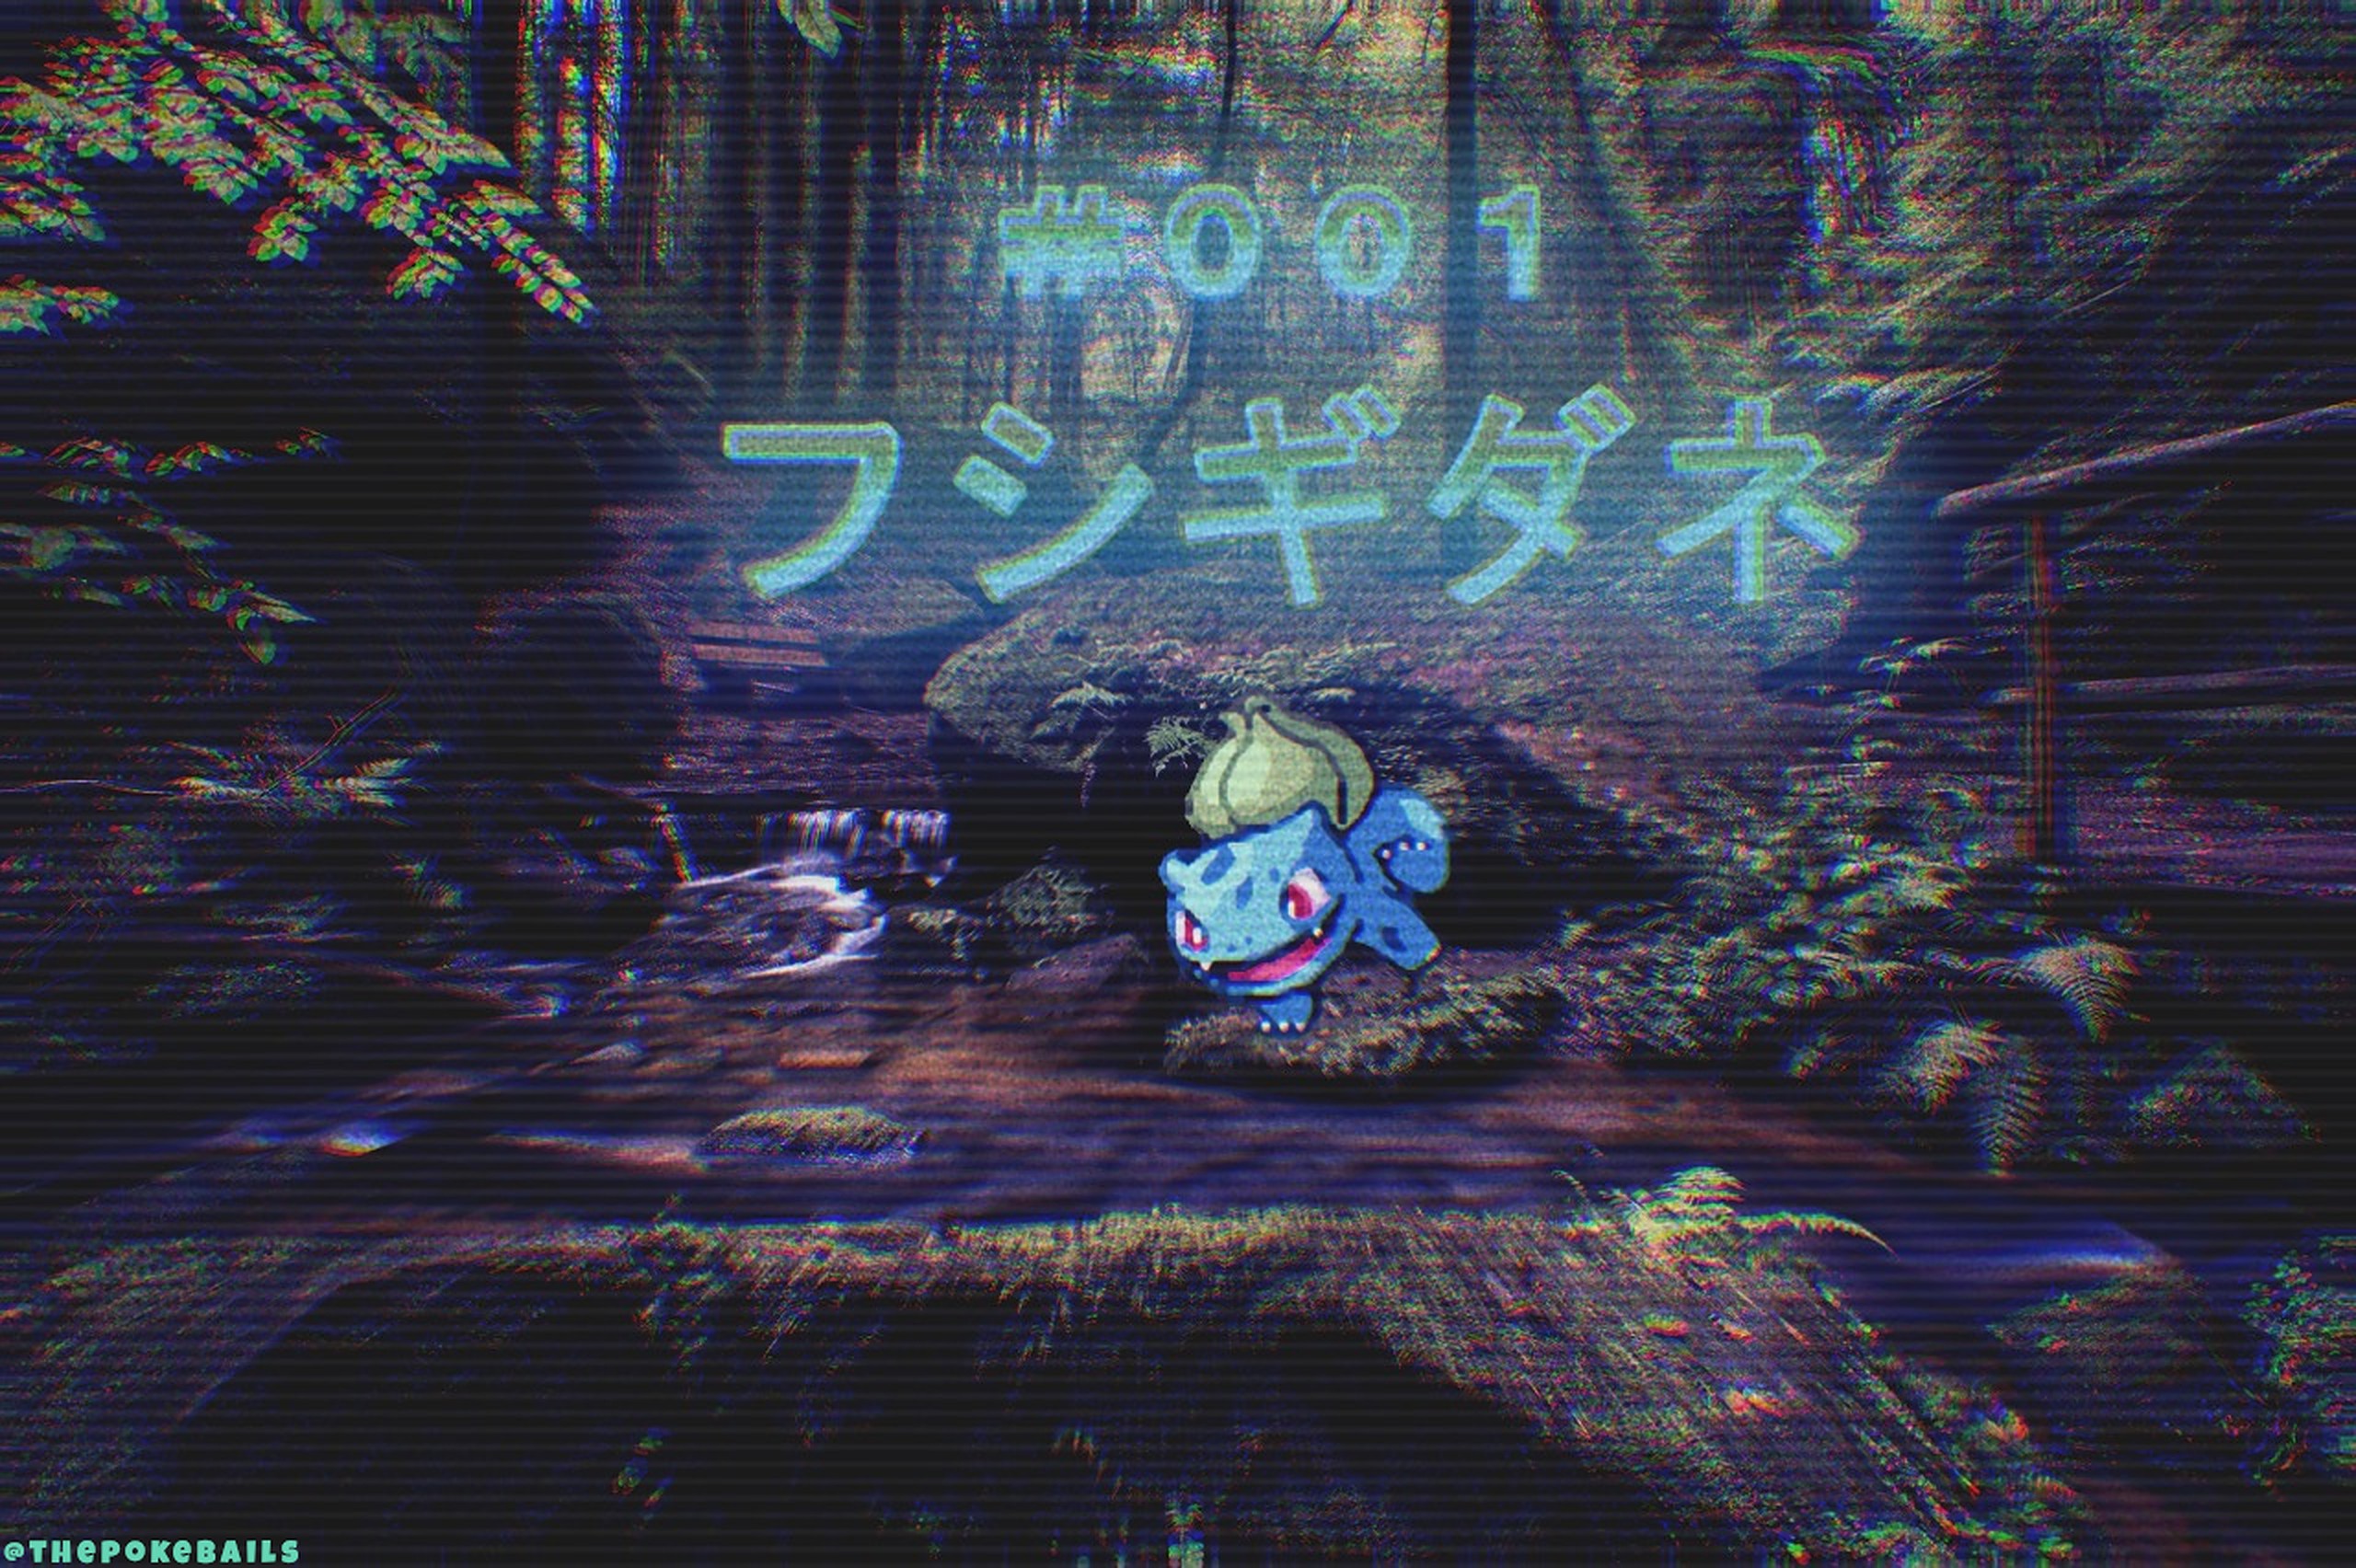 Anime 2560x1704 Pokémon Bulbasaur vaporwave forest stream nature landscape trees moss Pokémon Go Japanese katakana anime